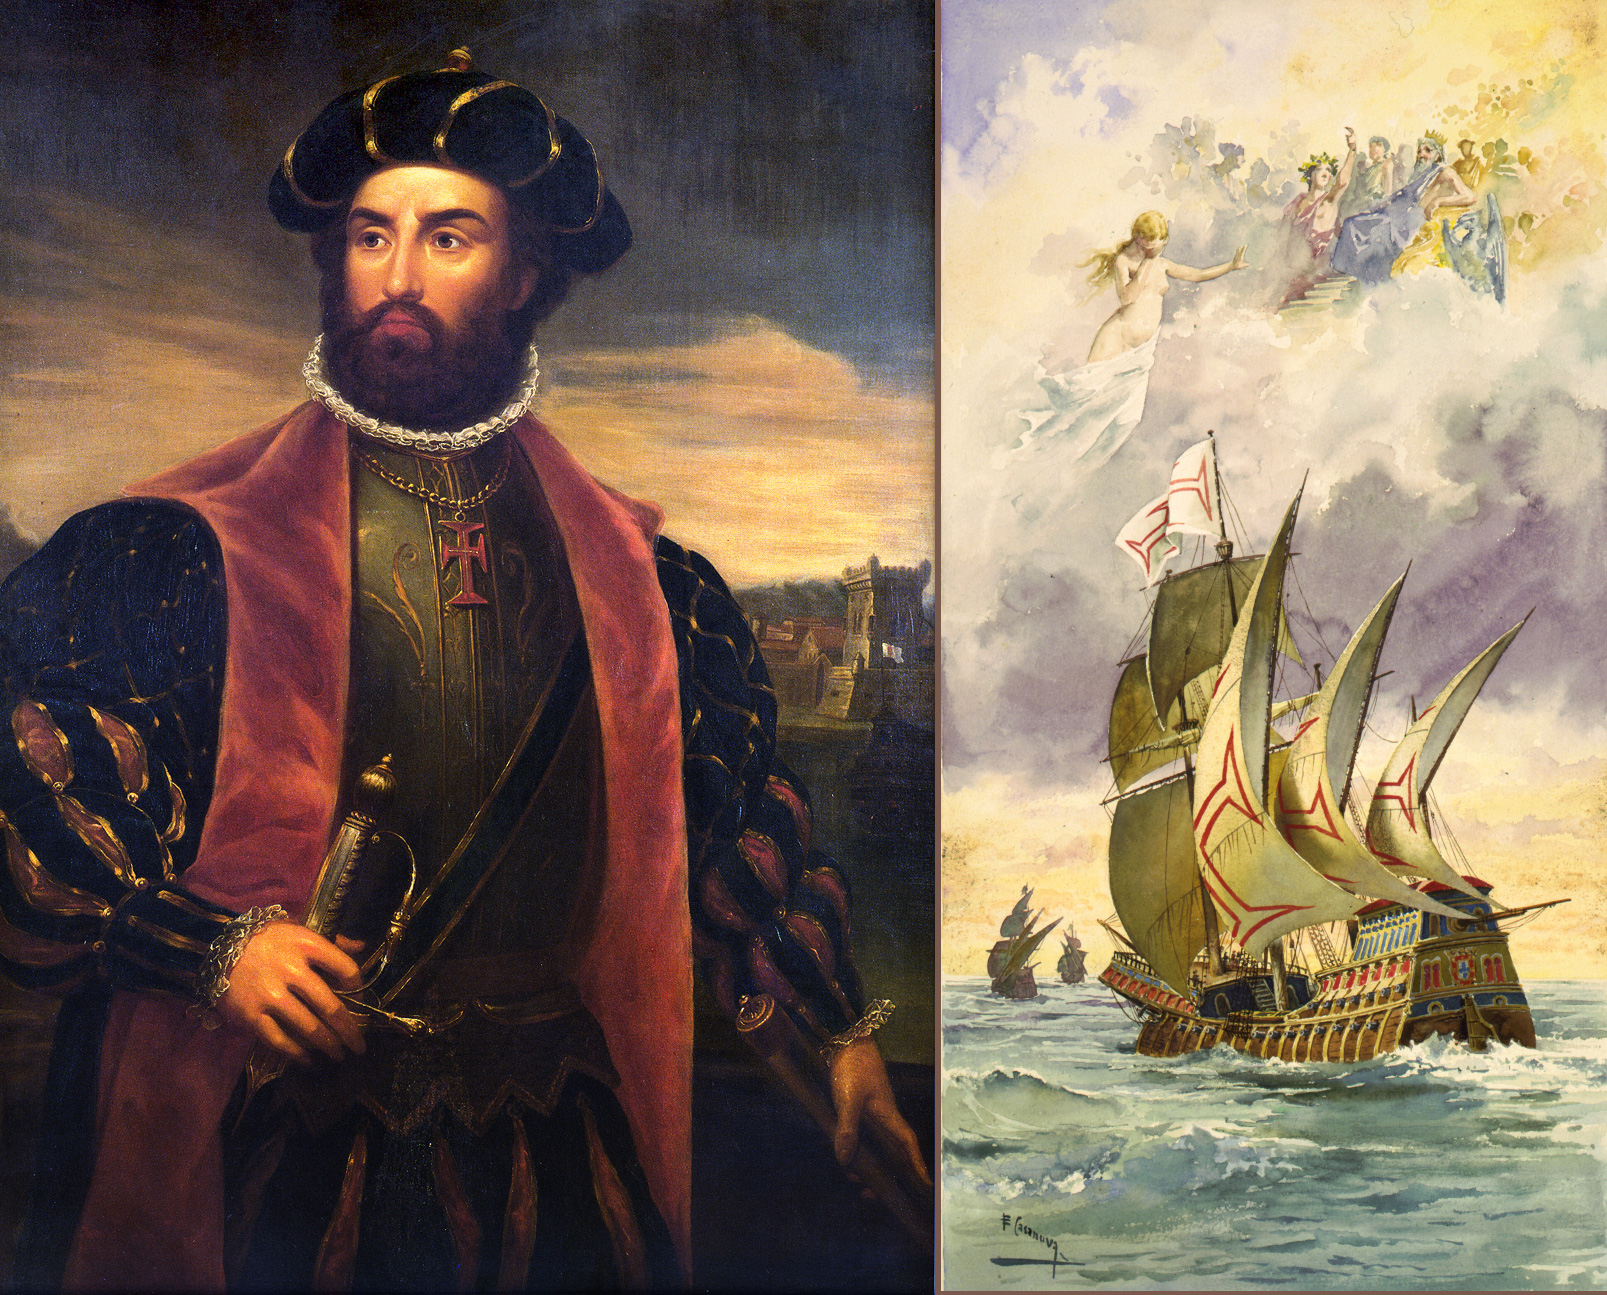 Vasco da Gama rounds the Cape of Good Hope, the point where Bartolomeu Dias had previously turned back to Portugal